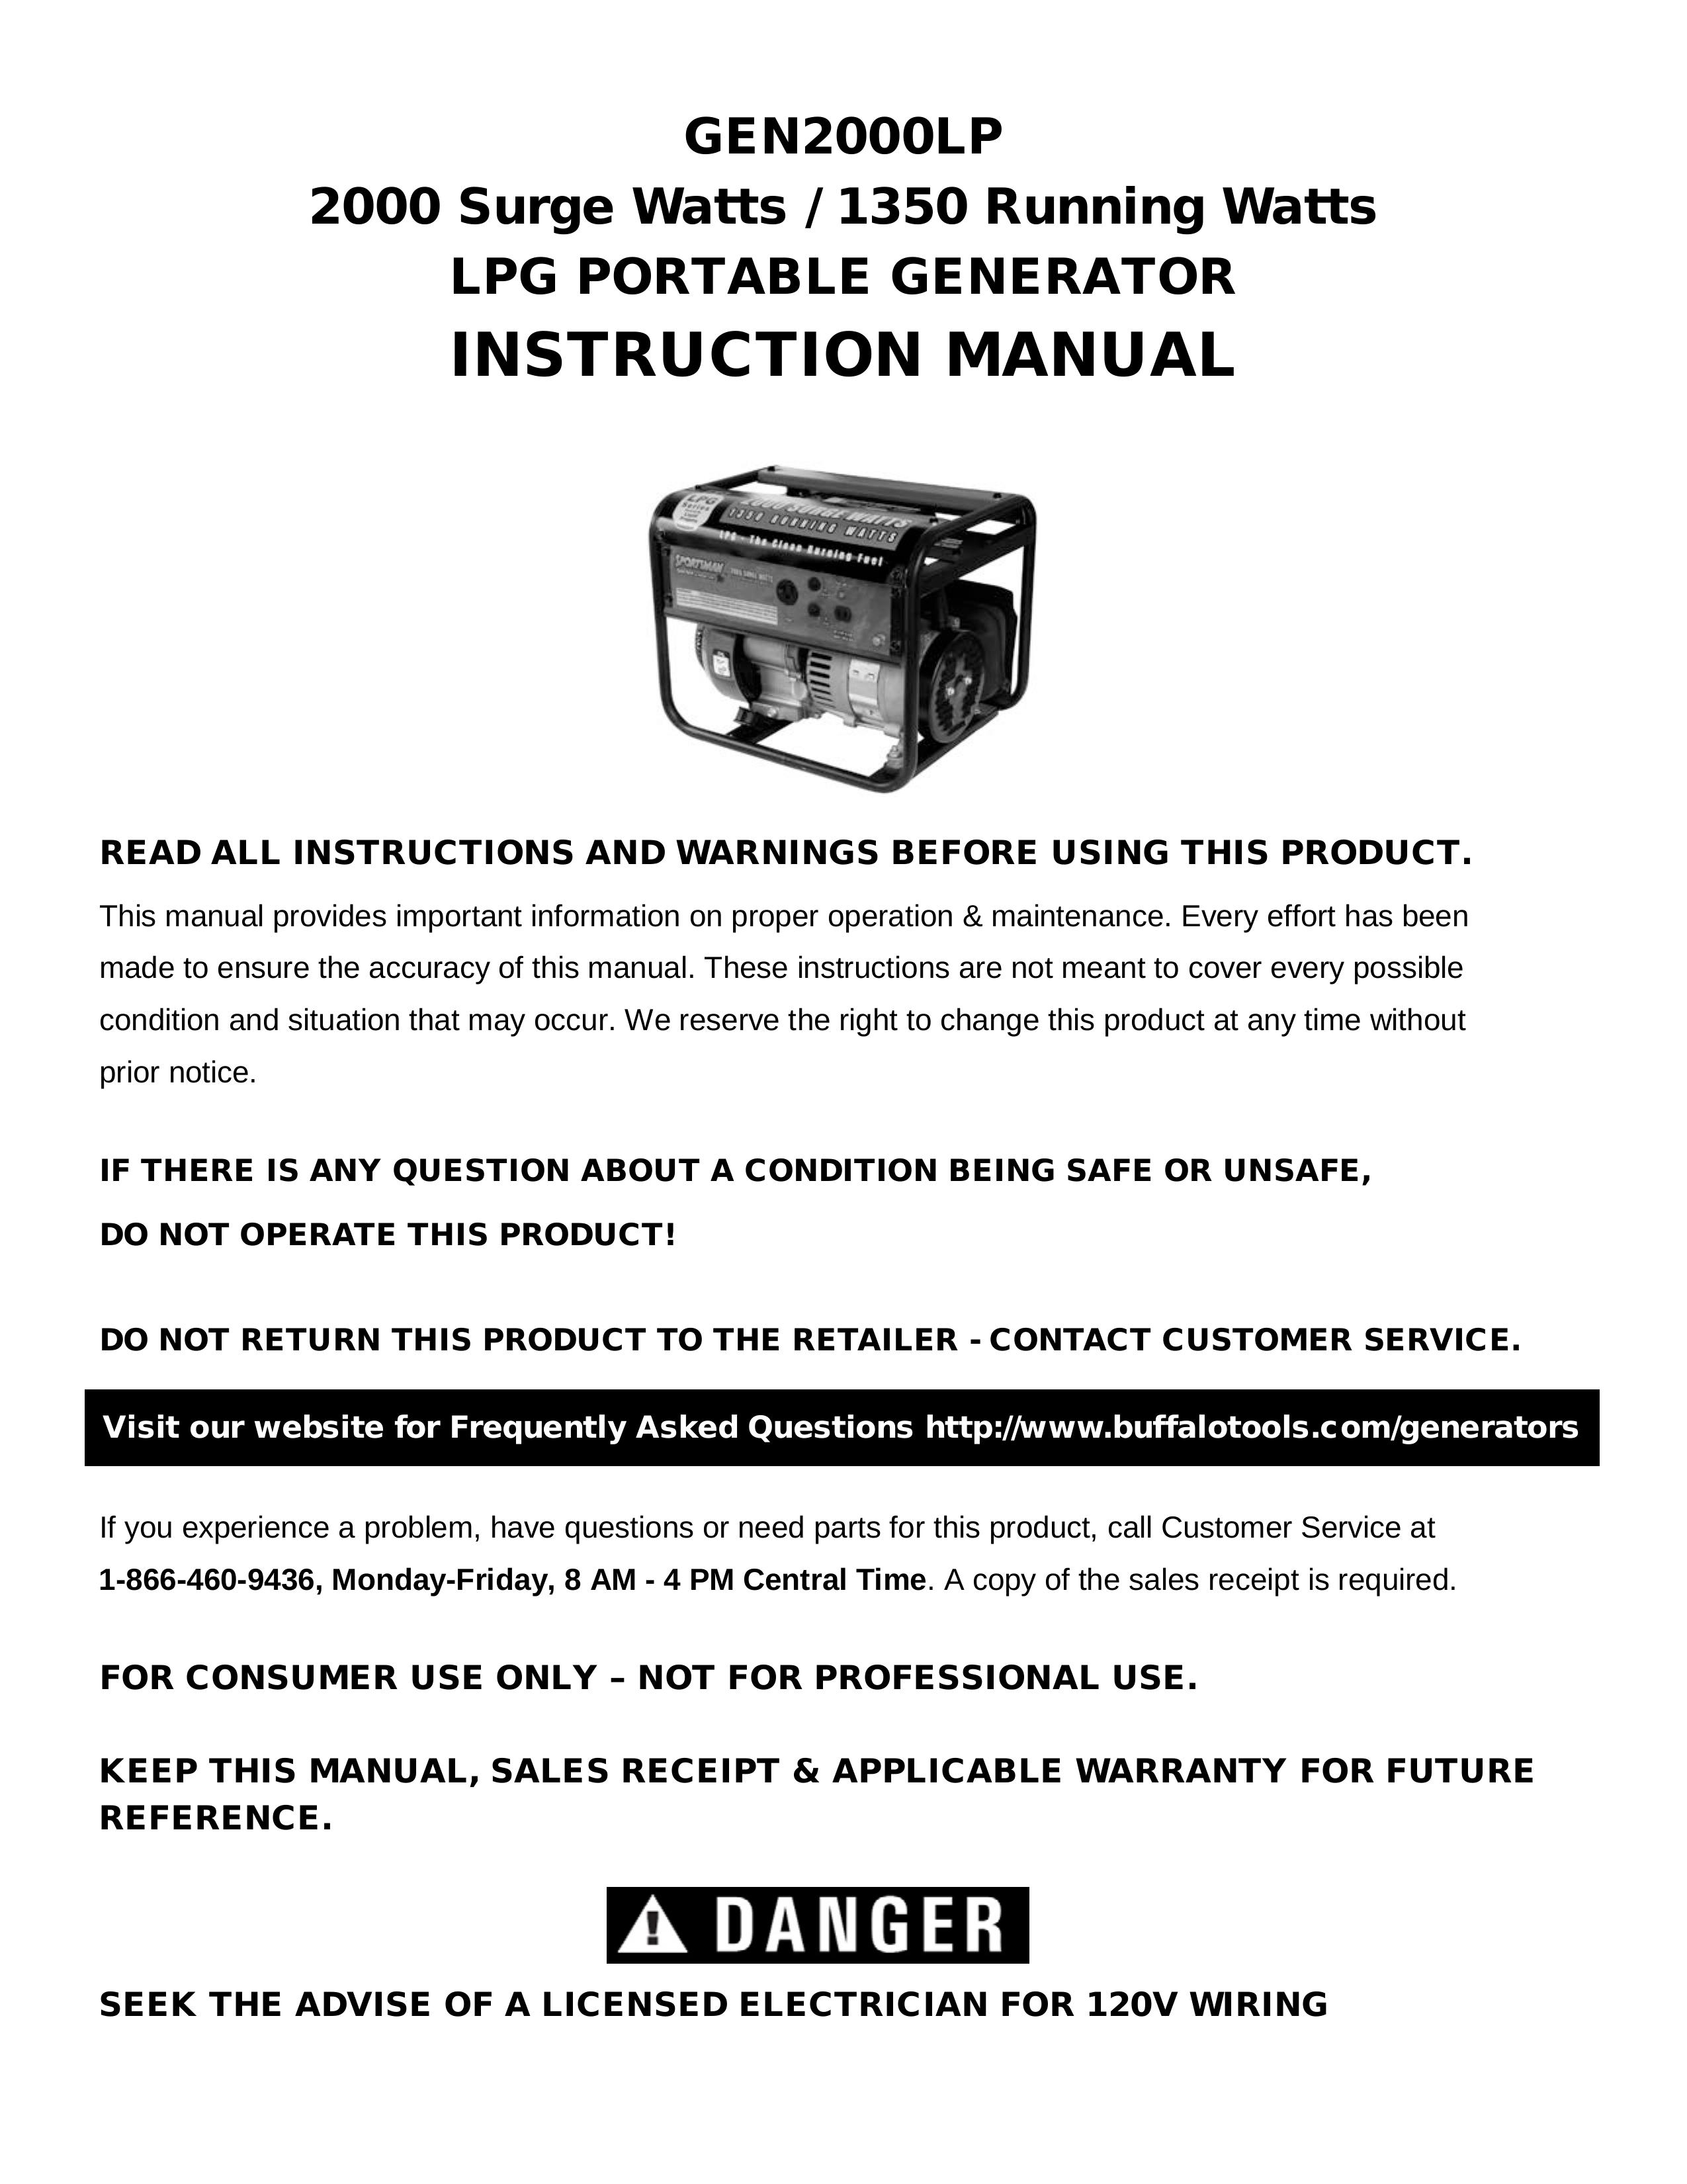 Buffalo Tools GEN2000LP Portable Generator User Manual